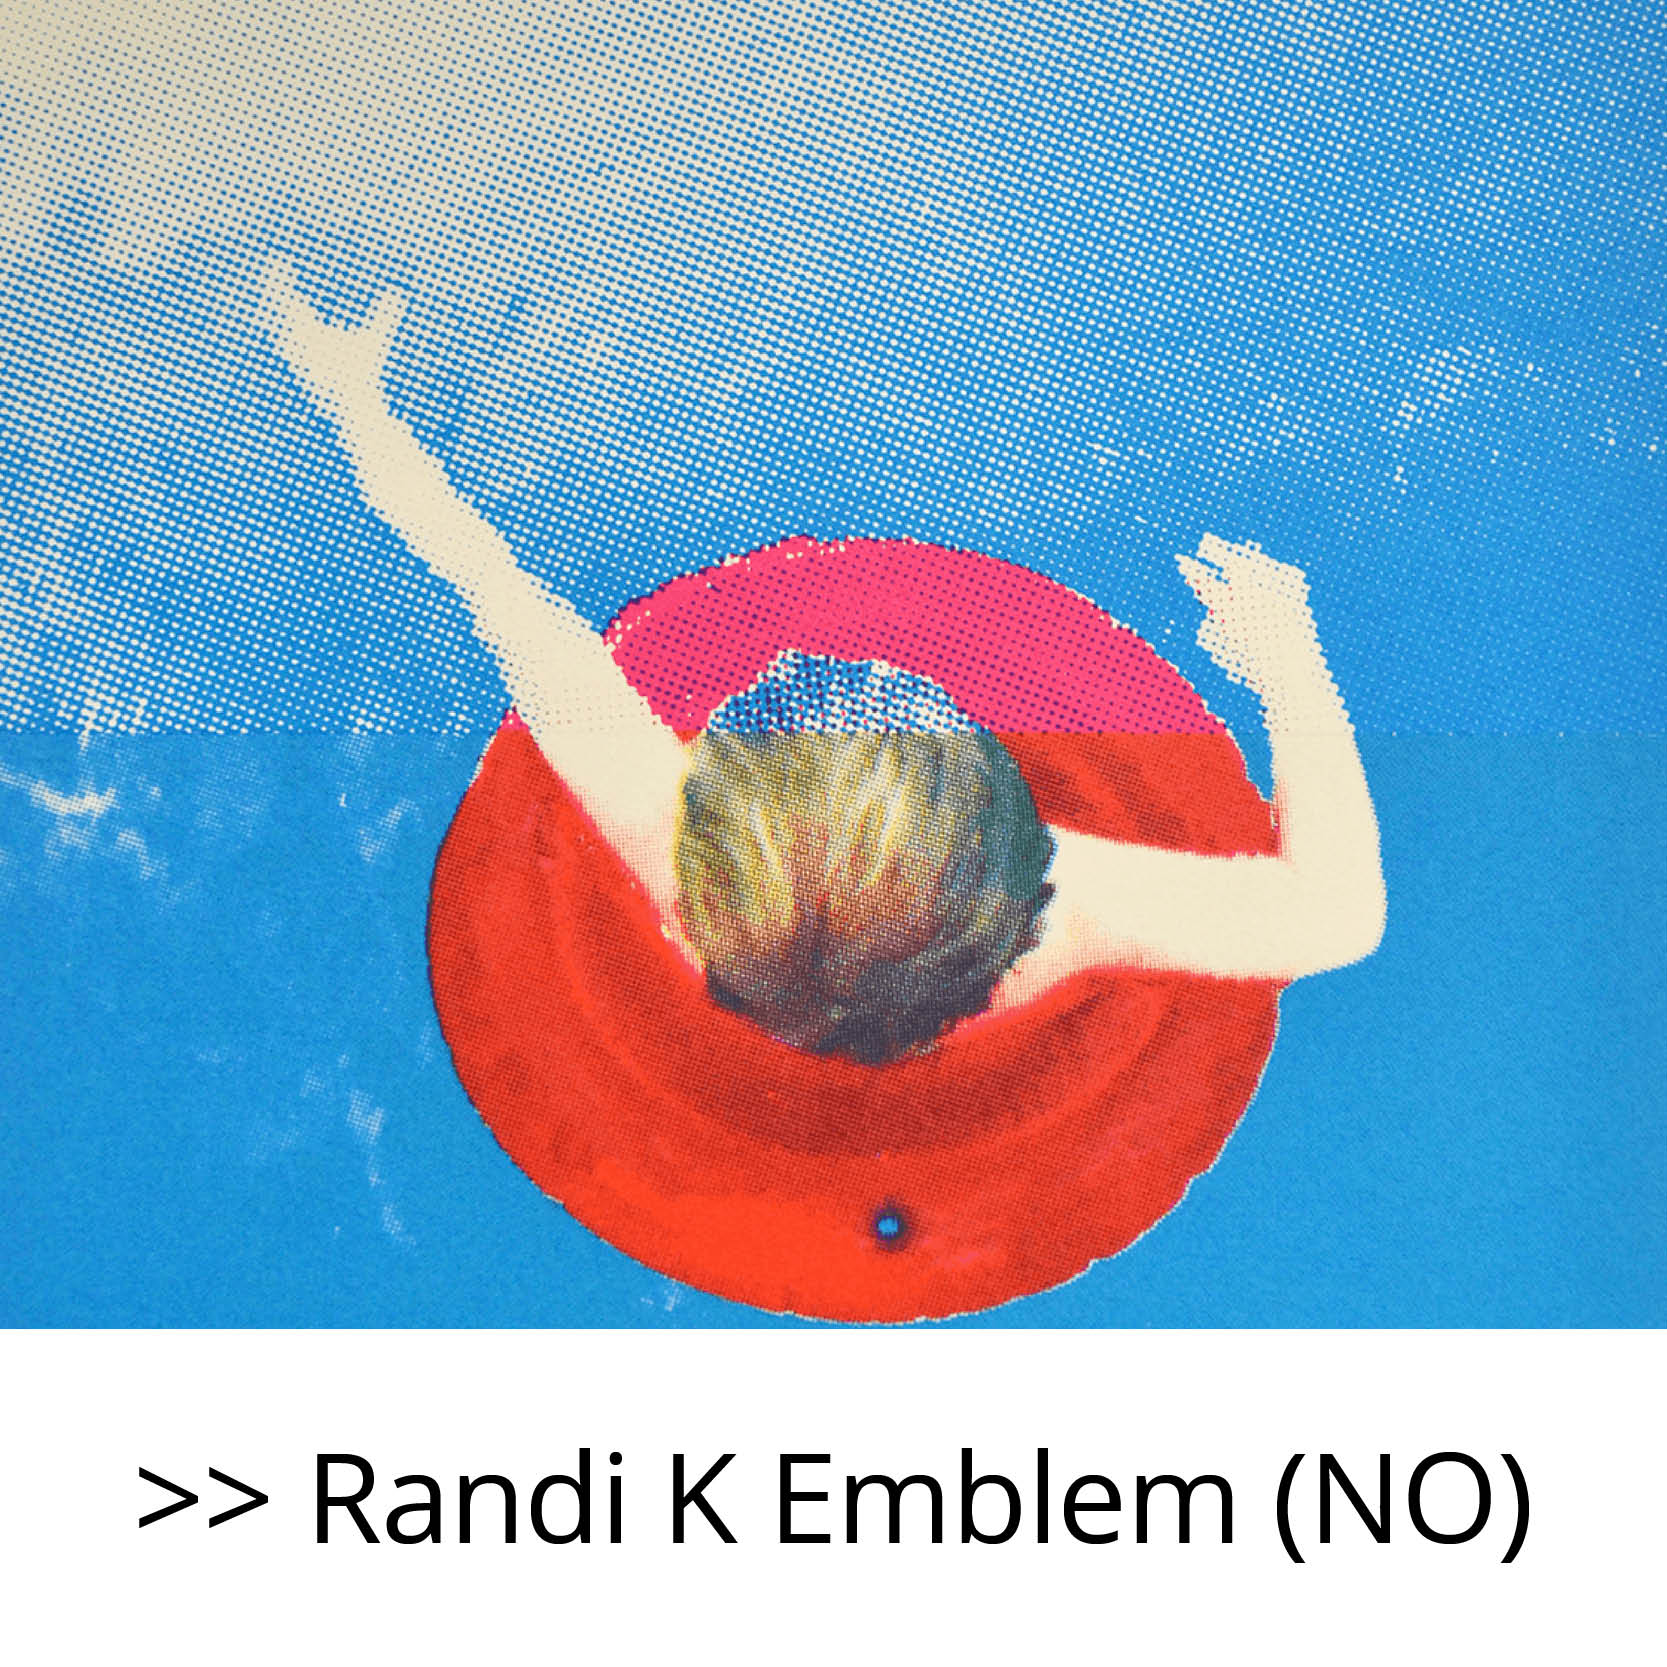 Randi_K_Emblem_(NO)